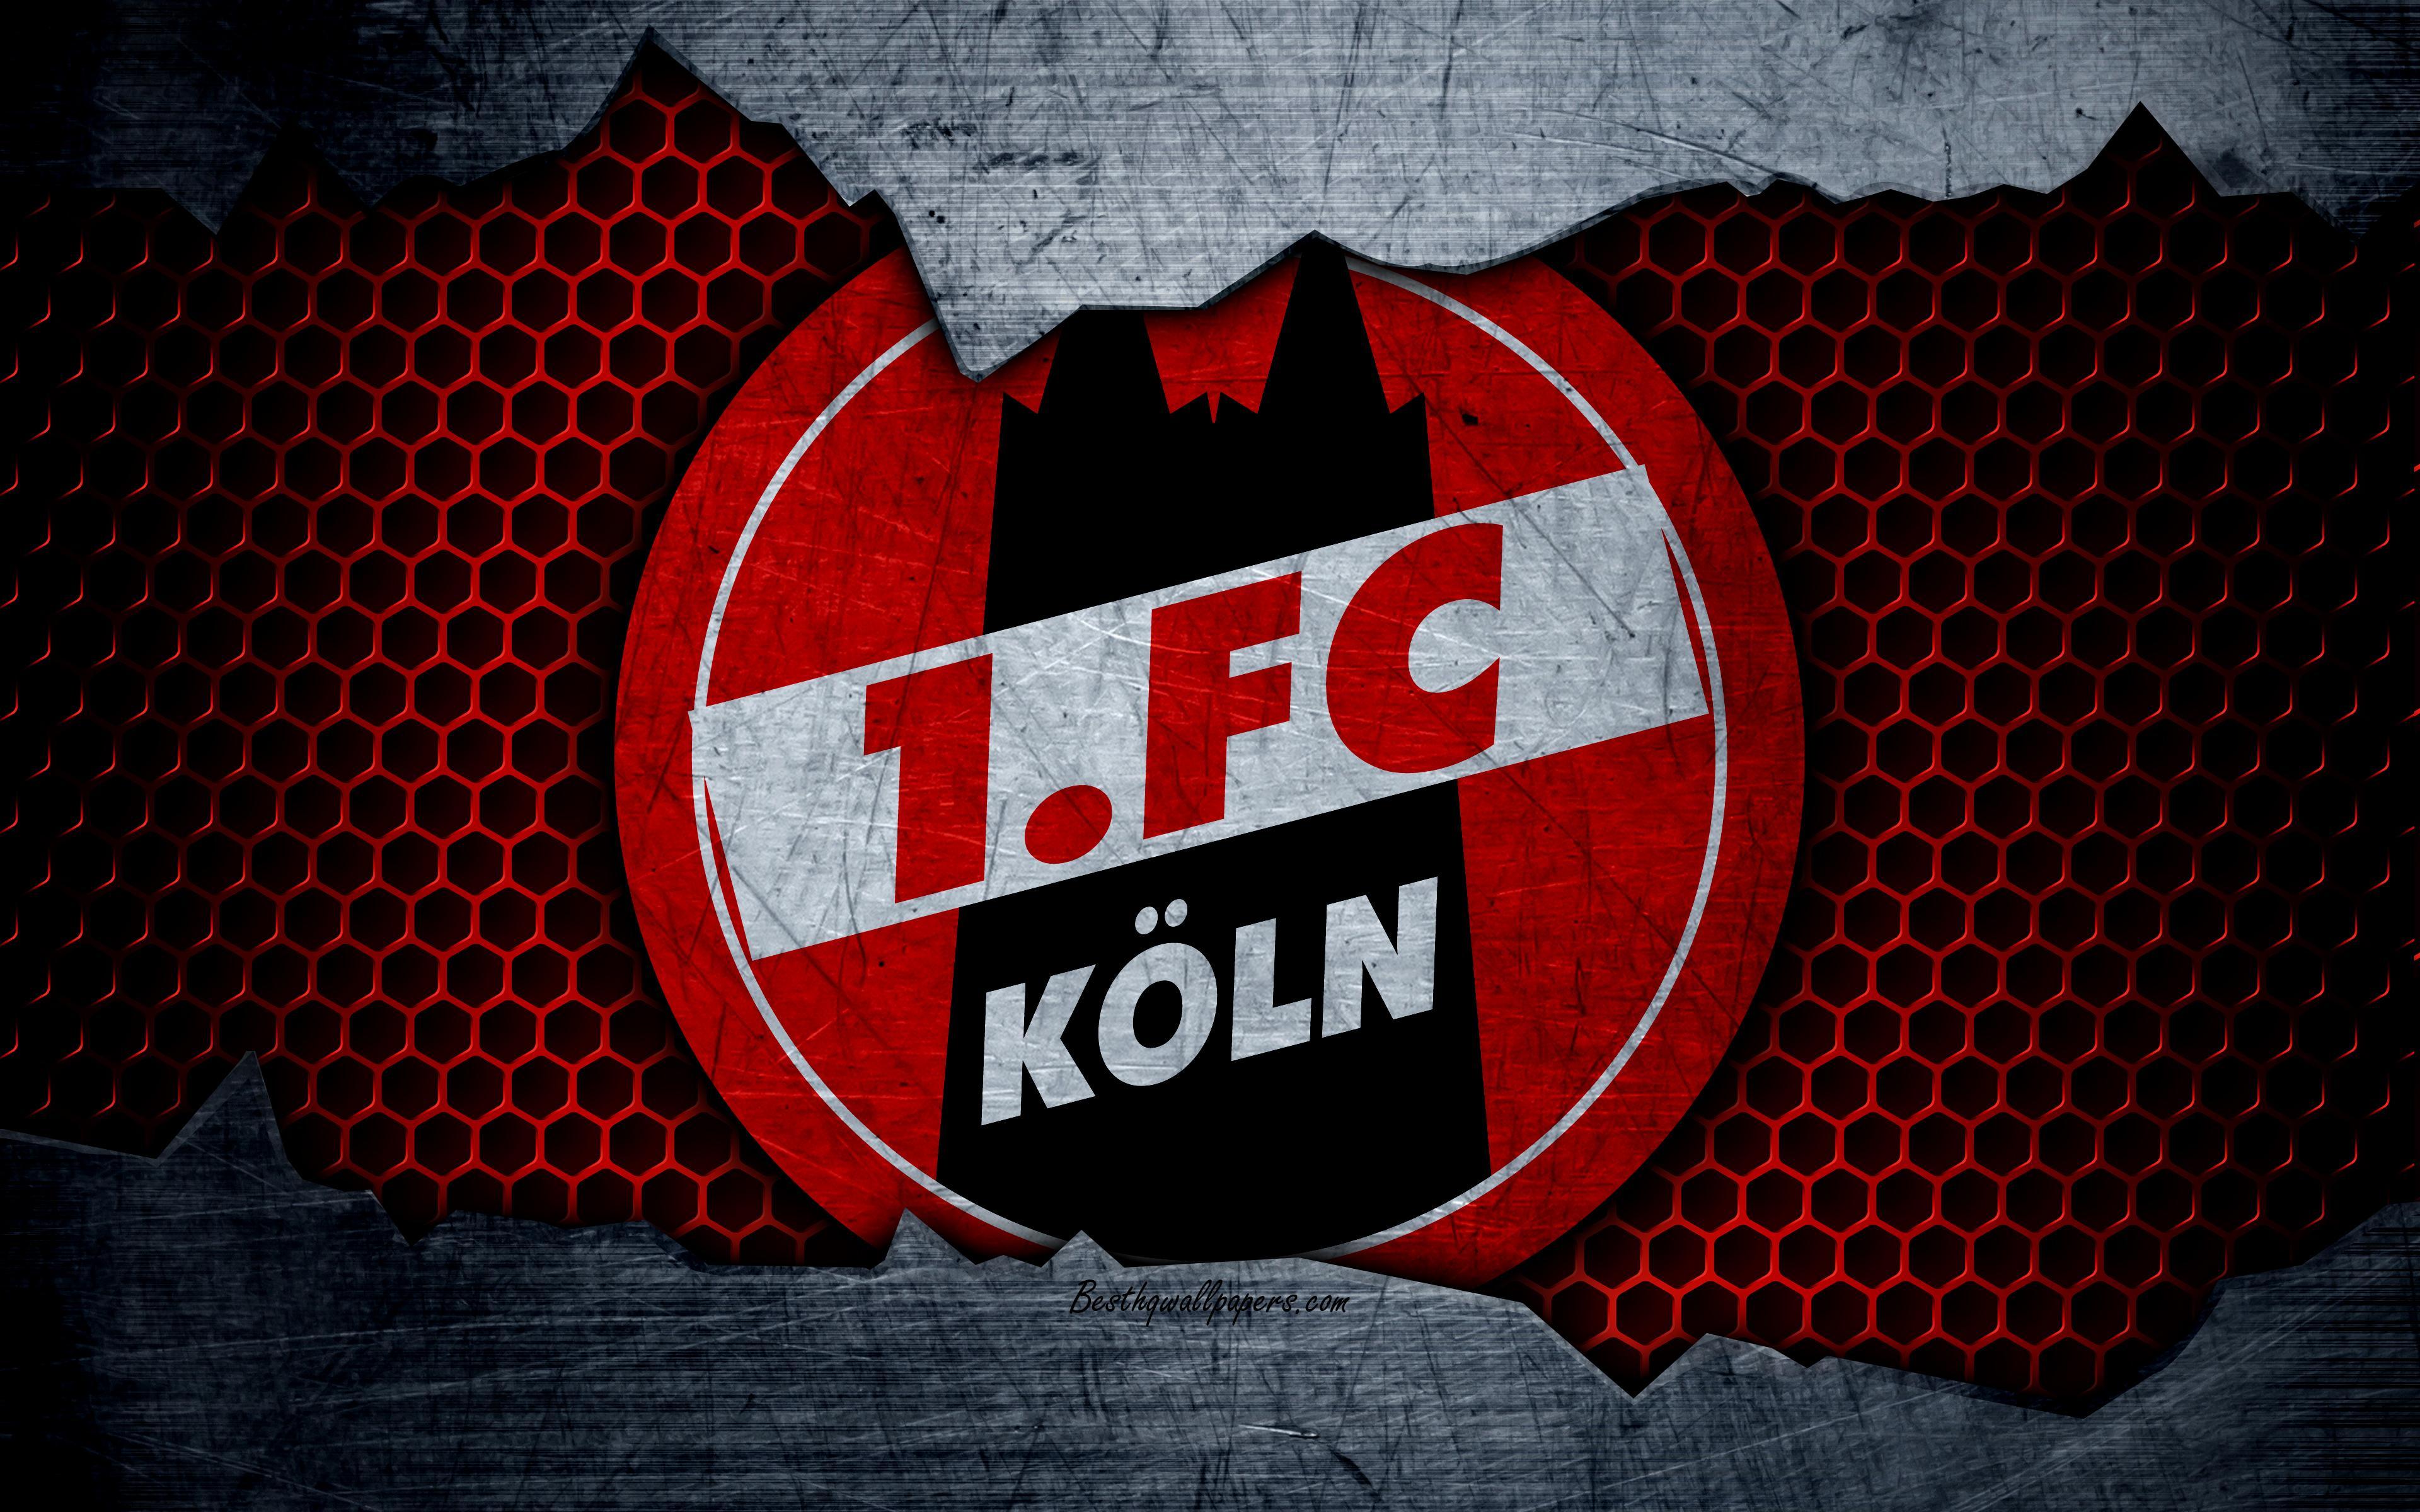 Download wallpaper FC Koln, 4k, logo, Bundesliga, metal texture